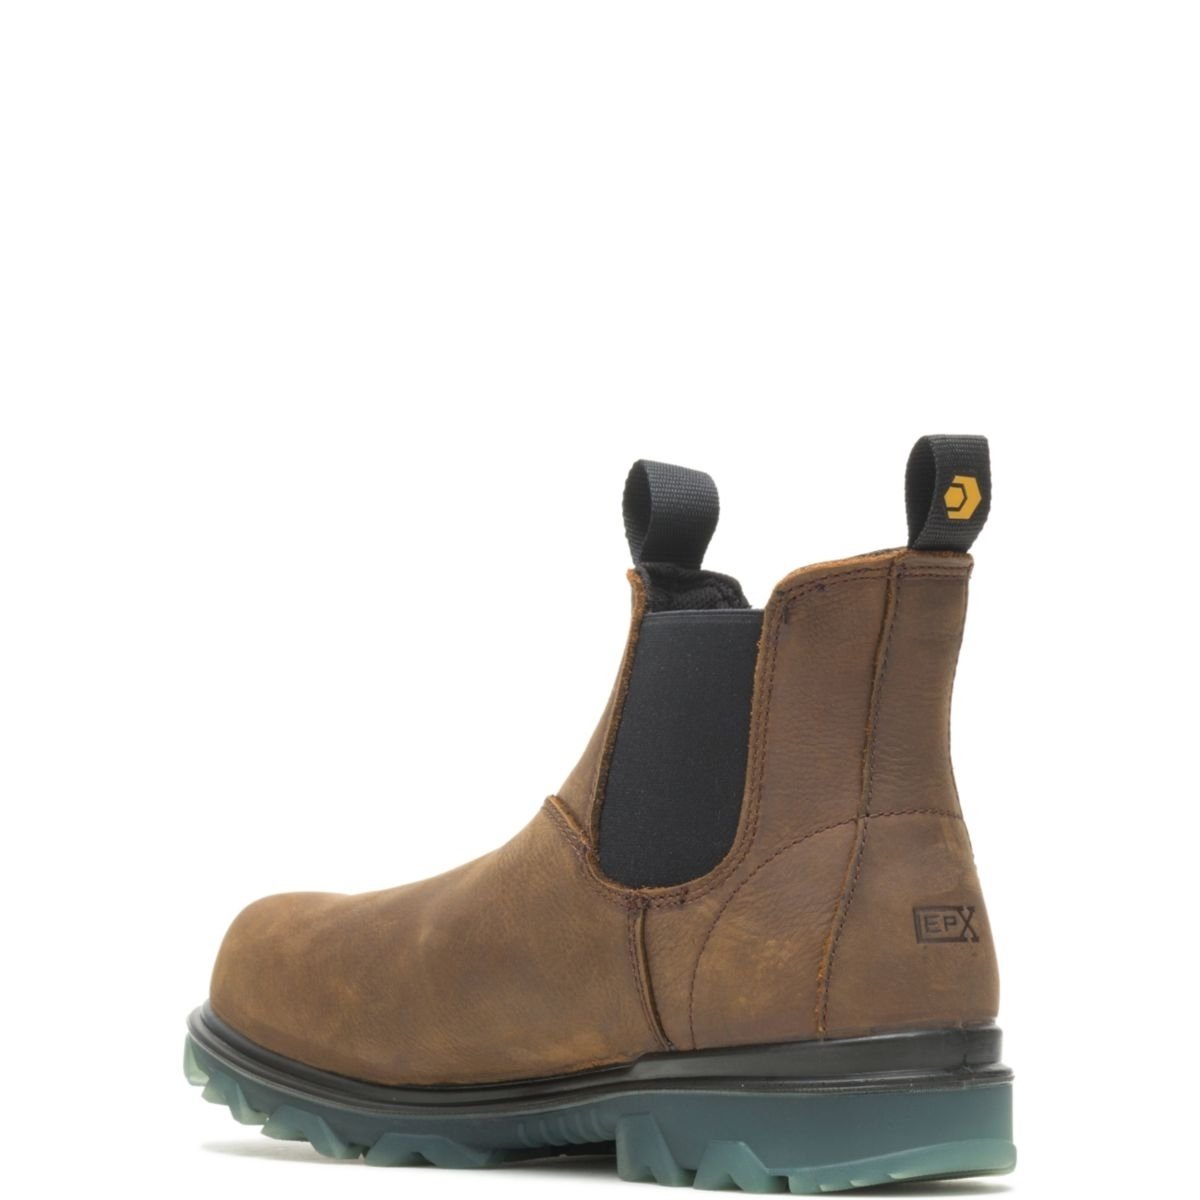 WOLVERINE Men's I-90 EPXÂ® Waterproof Soft Toe Romeo Pull On Work Boot Brown - W10790 - SUDAN BROWN, 11.5 X-Wide